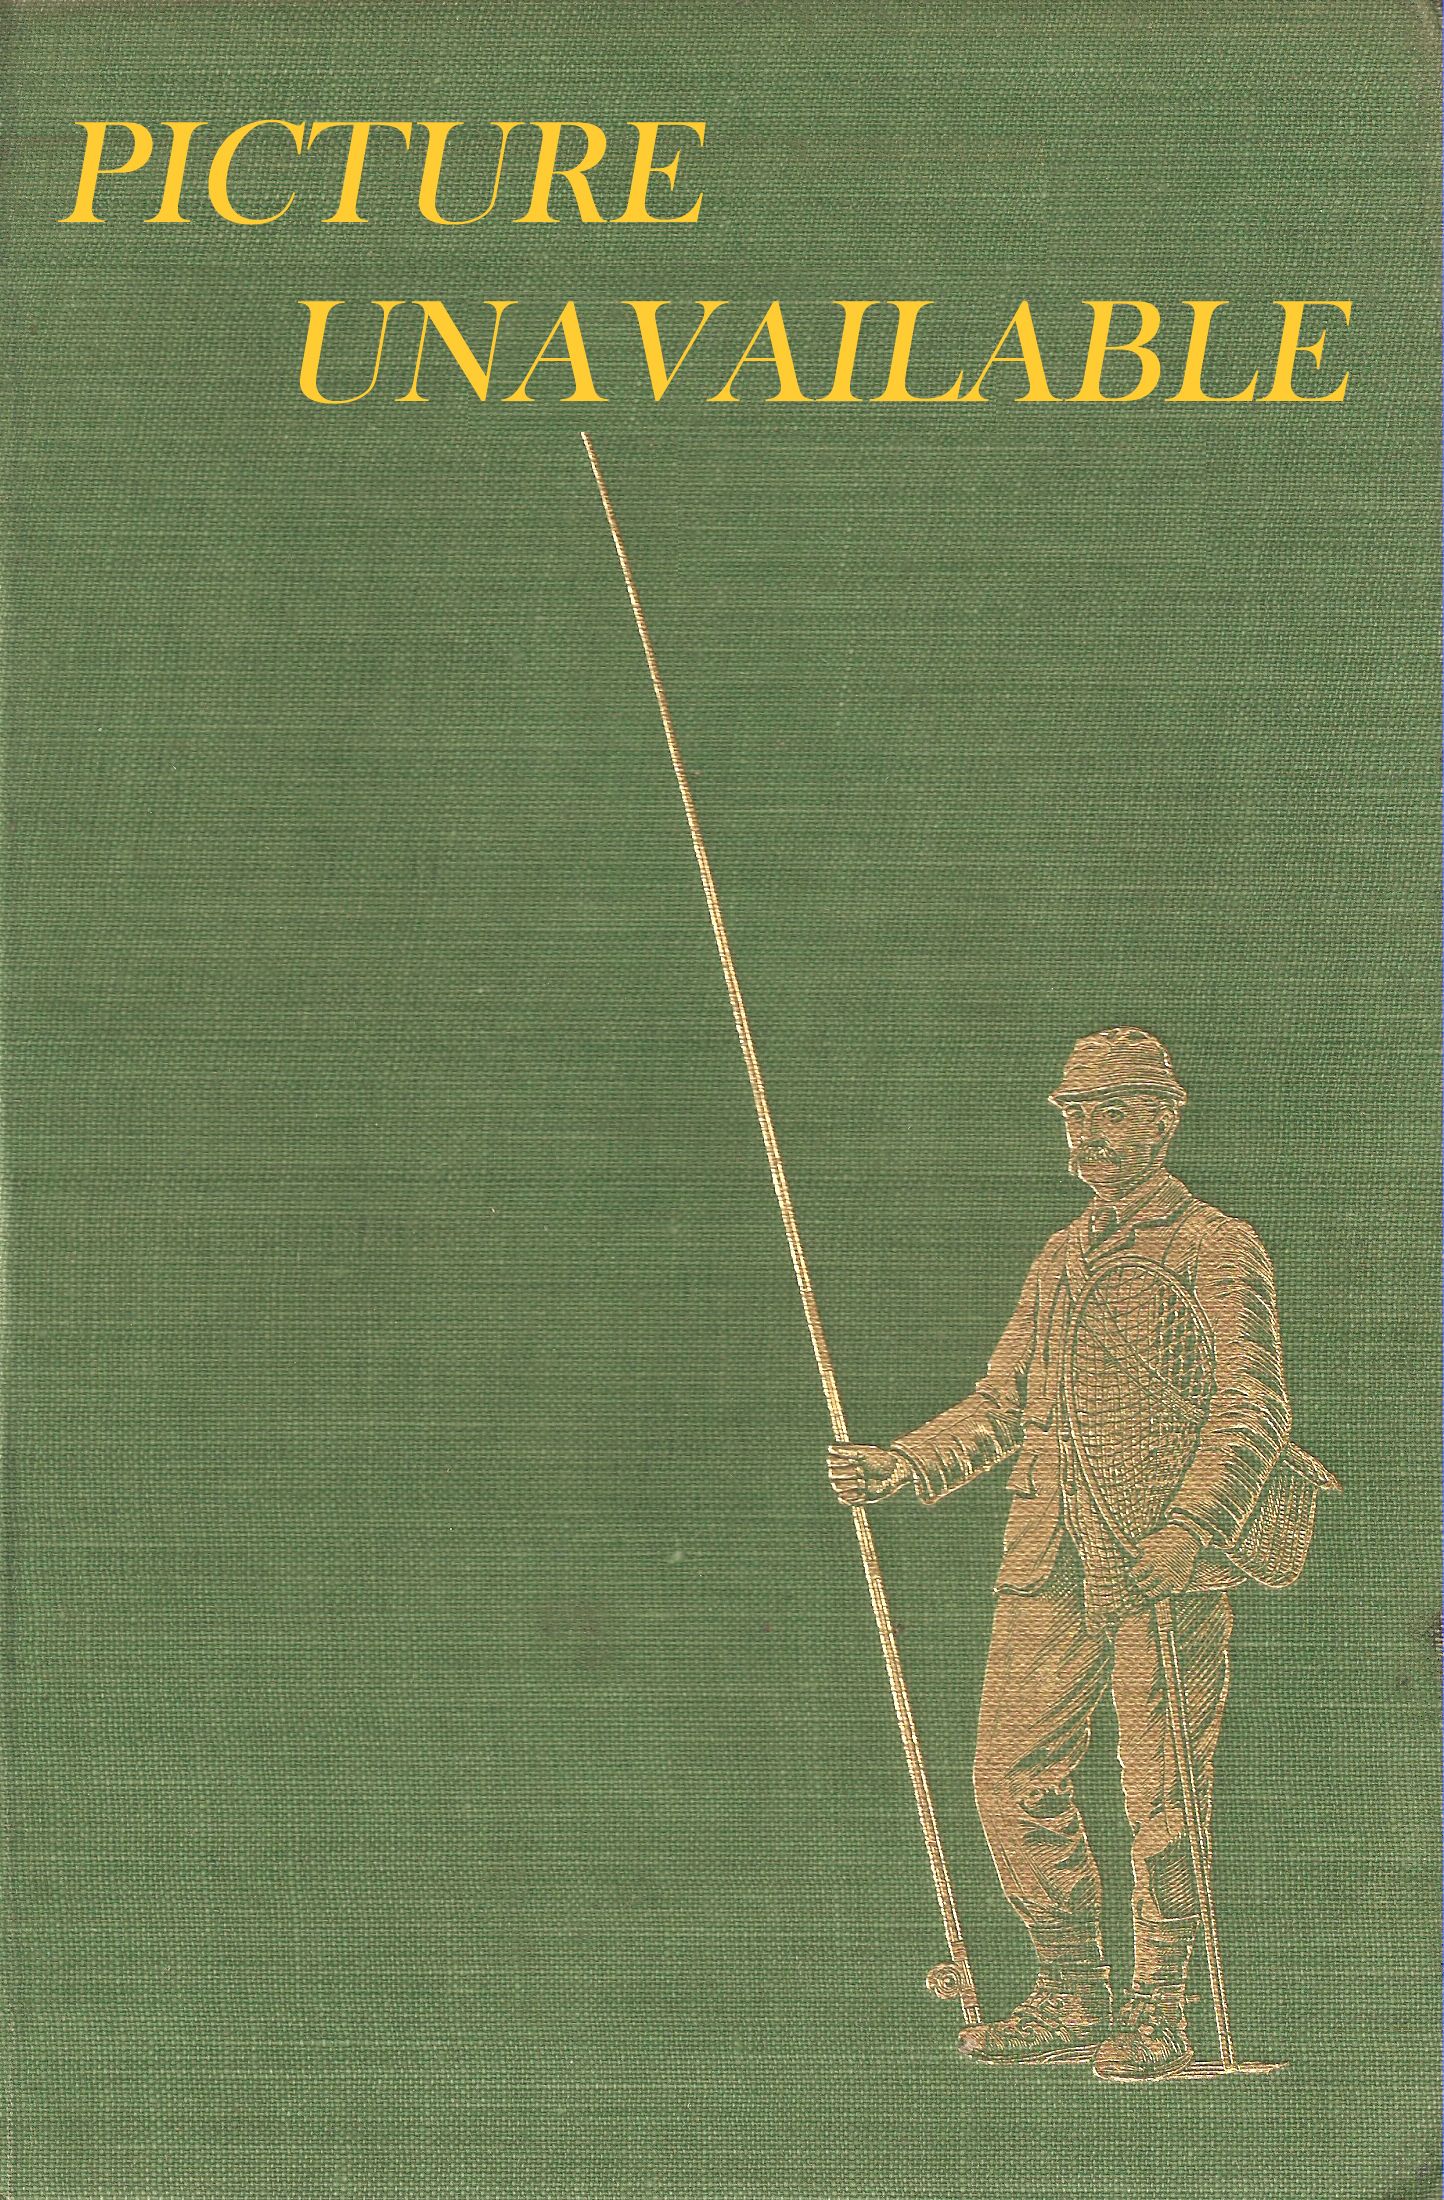 CREEL: A FISHING MAGAZINE. Volume 1, number 6. December 1963.